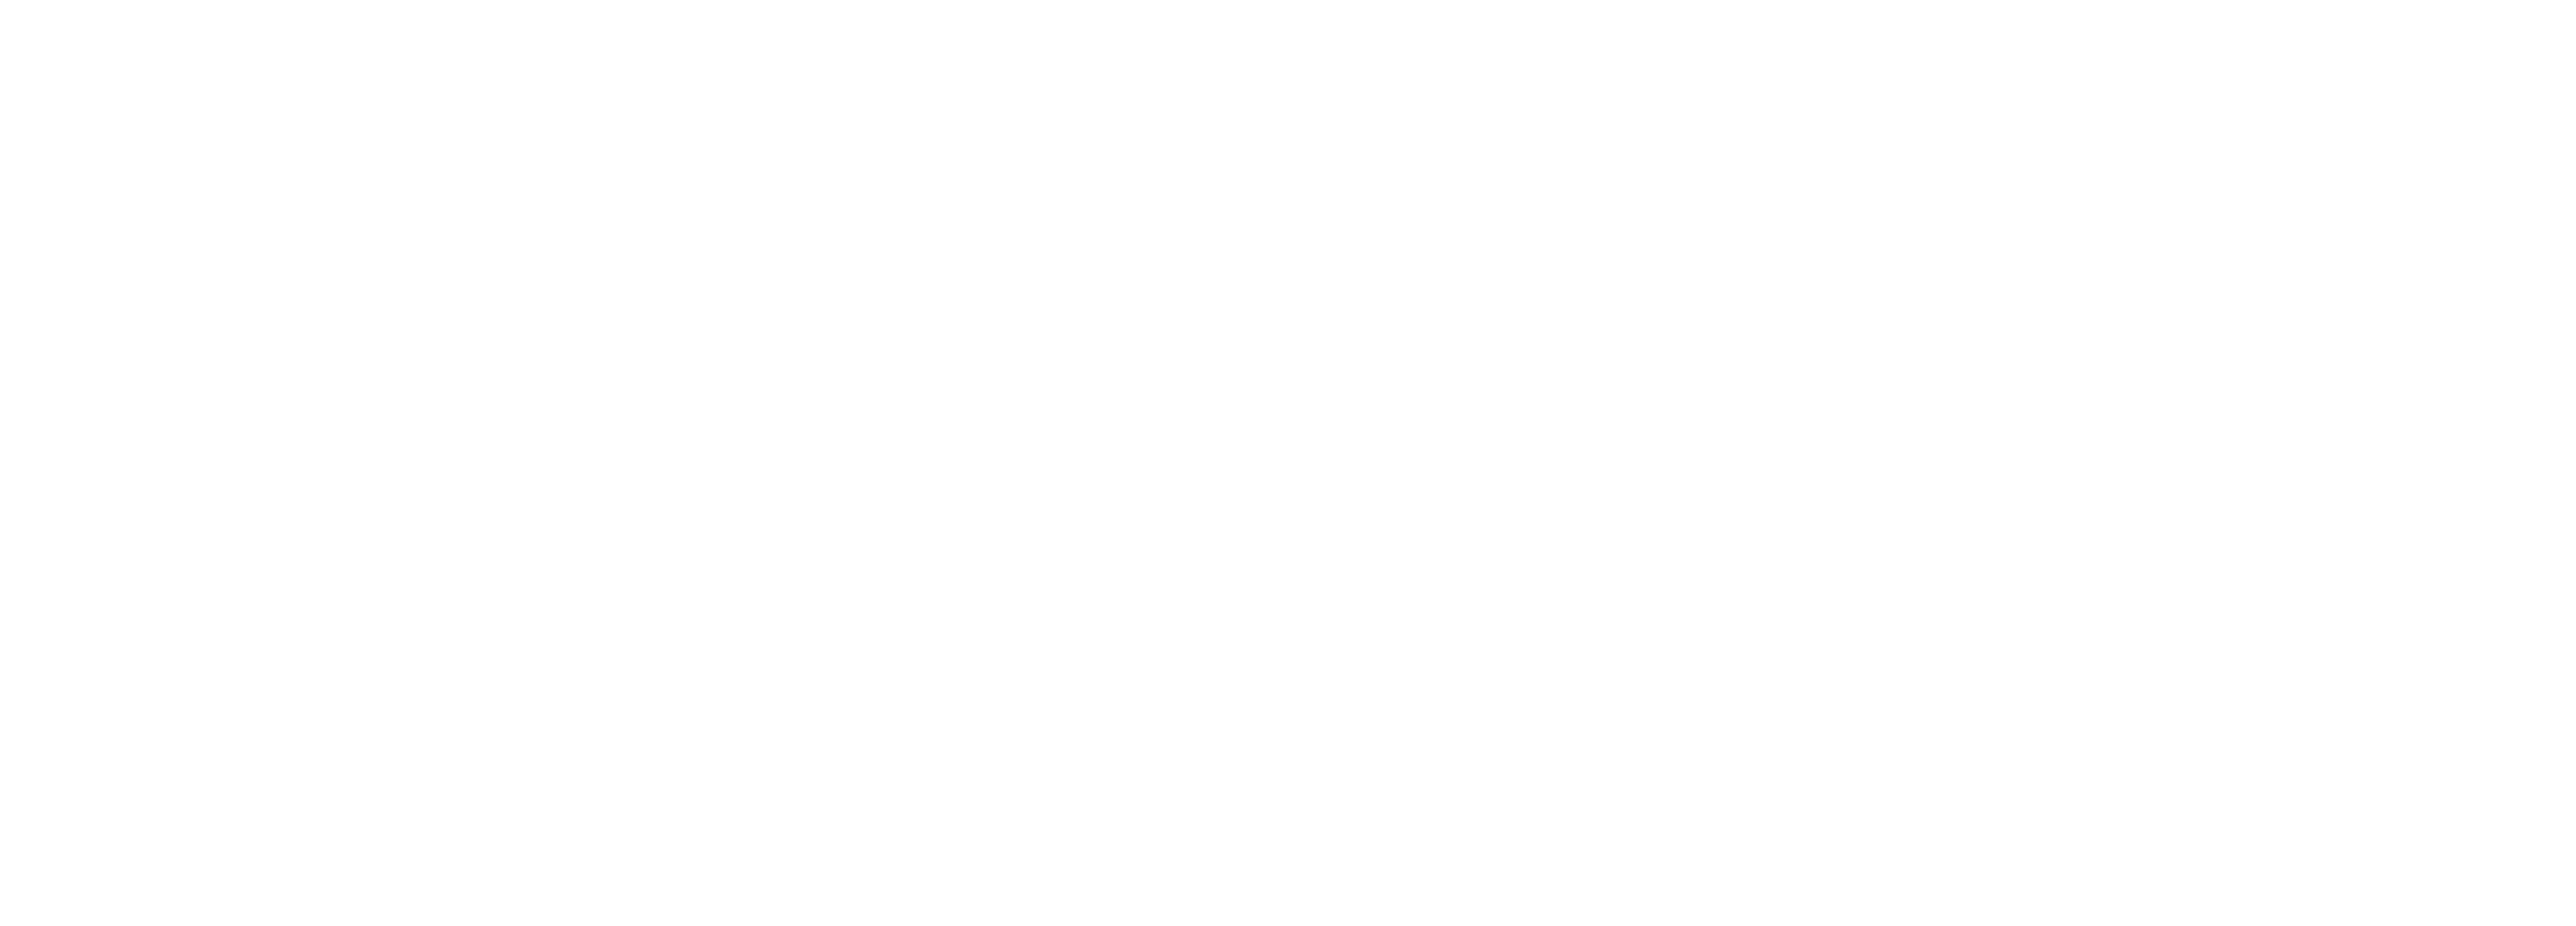 dwell real estate logo white